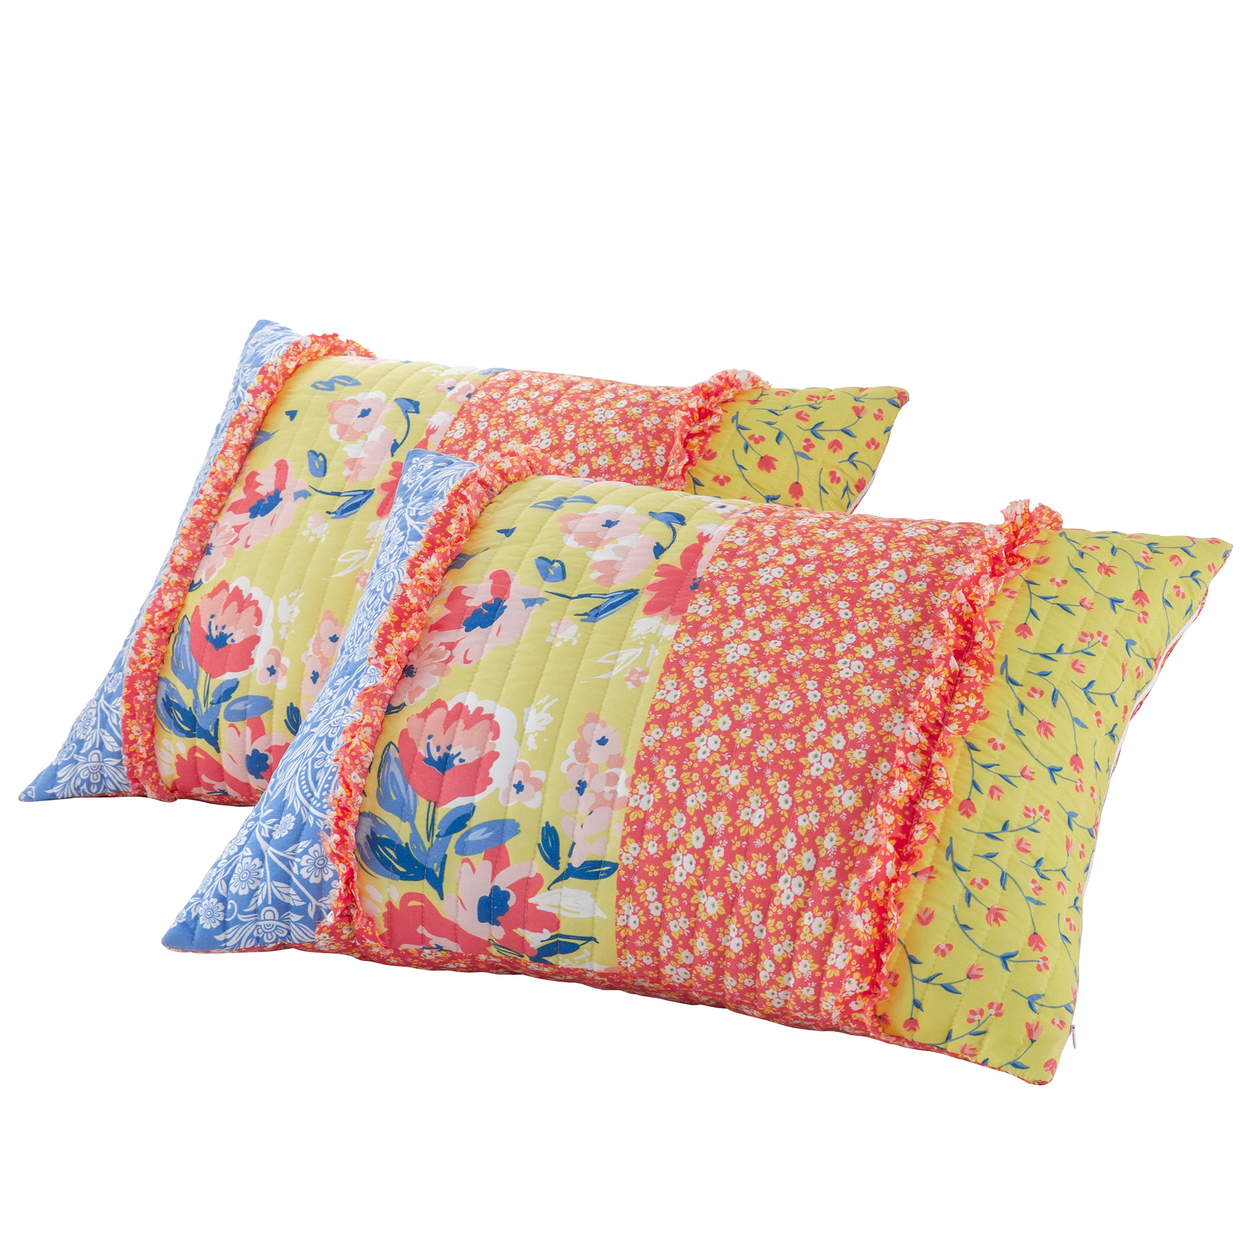 Lio 2 Piece Microfiber Twin Quilt Set, Bohemian Floral Pattern, Multicolor- Saltoro Sherpi